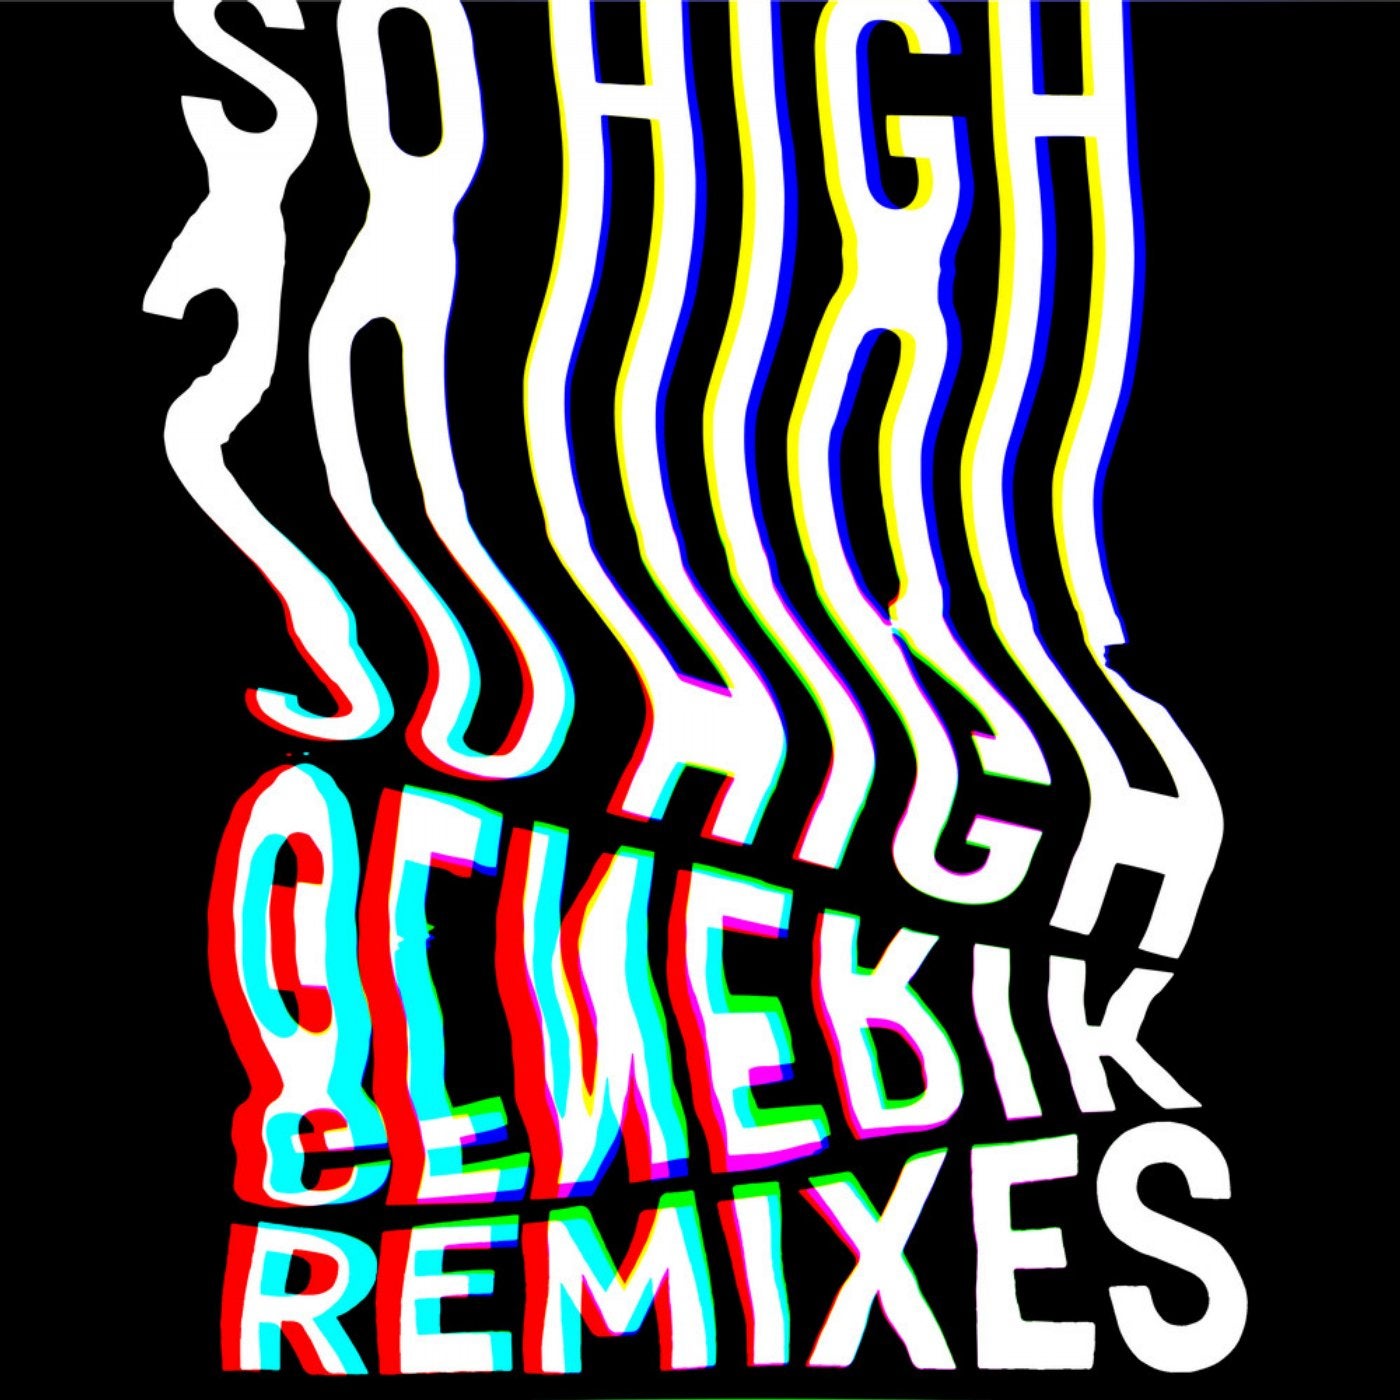 So High (Remixes)